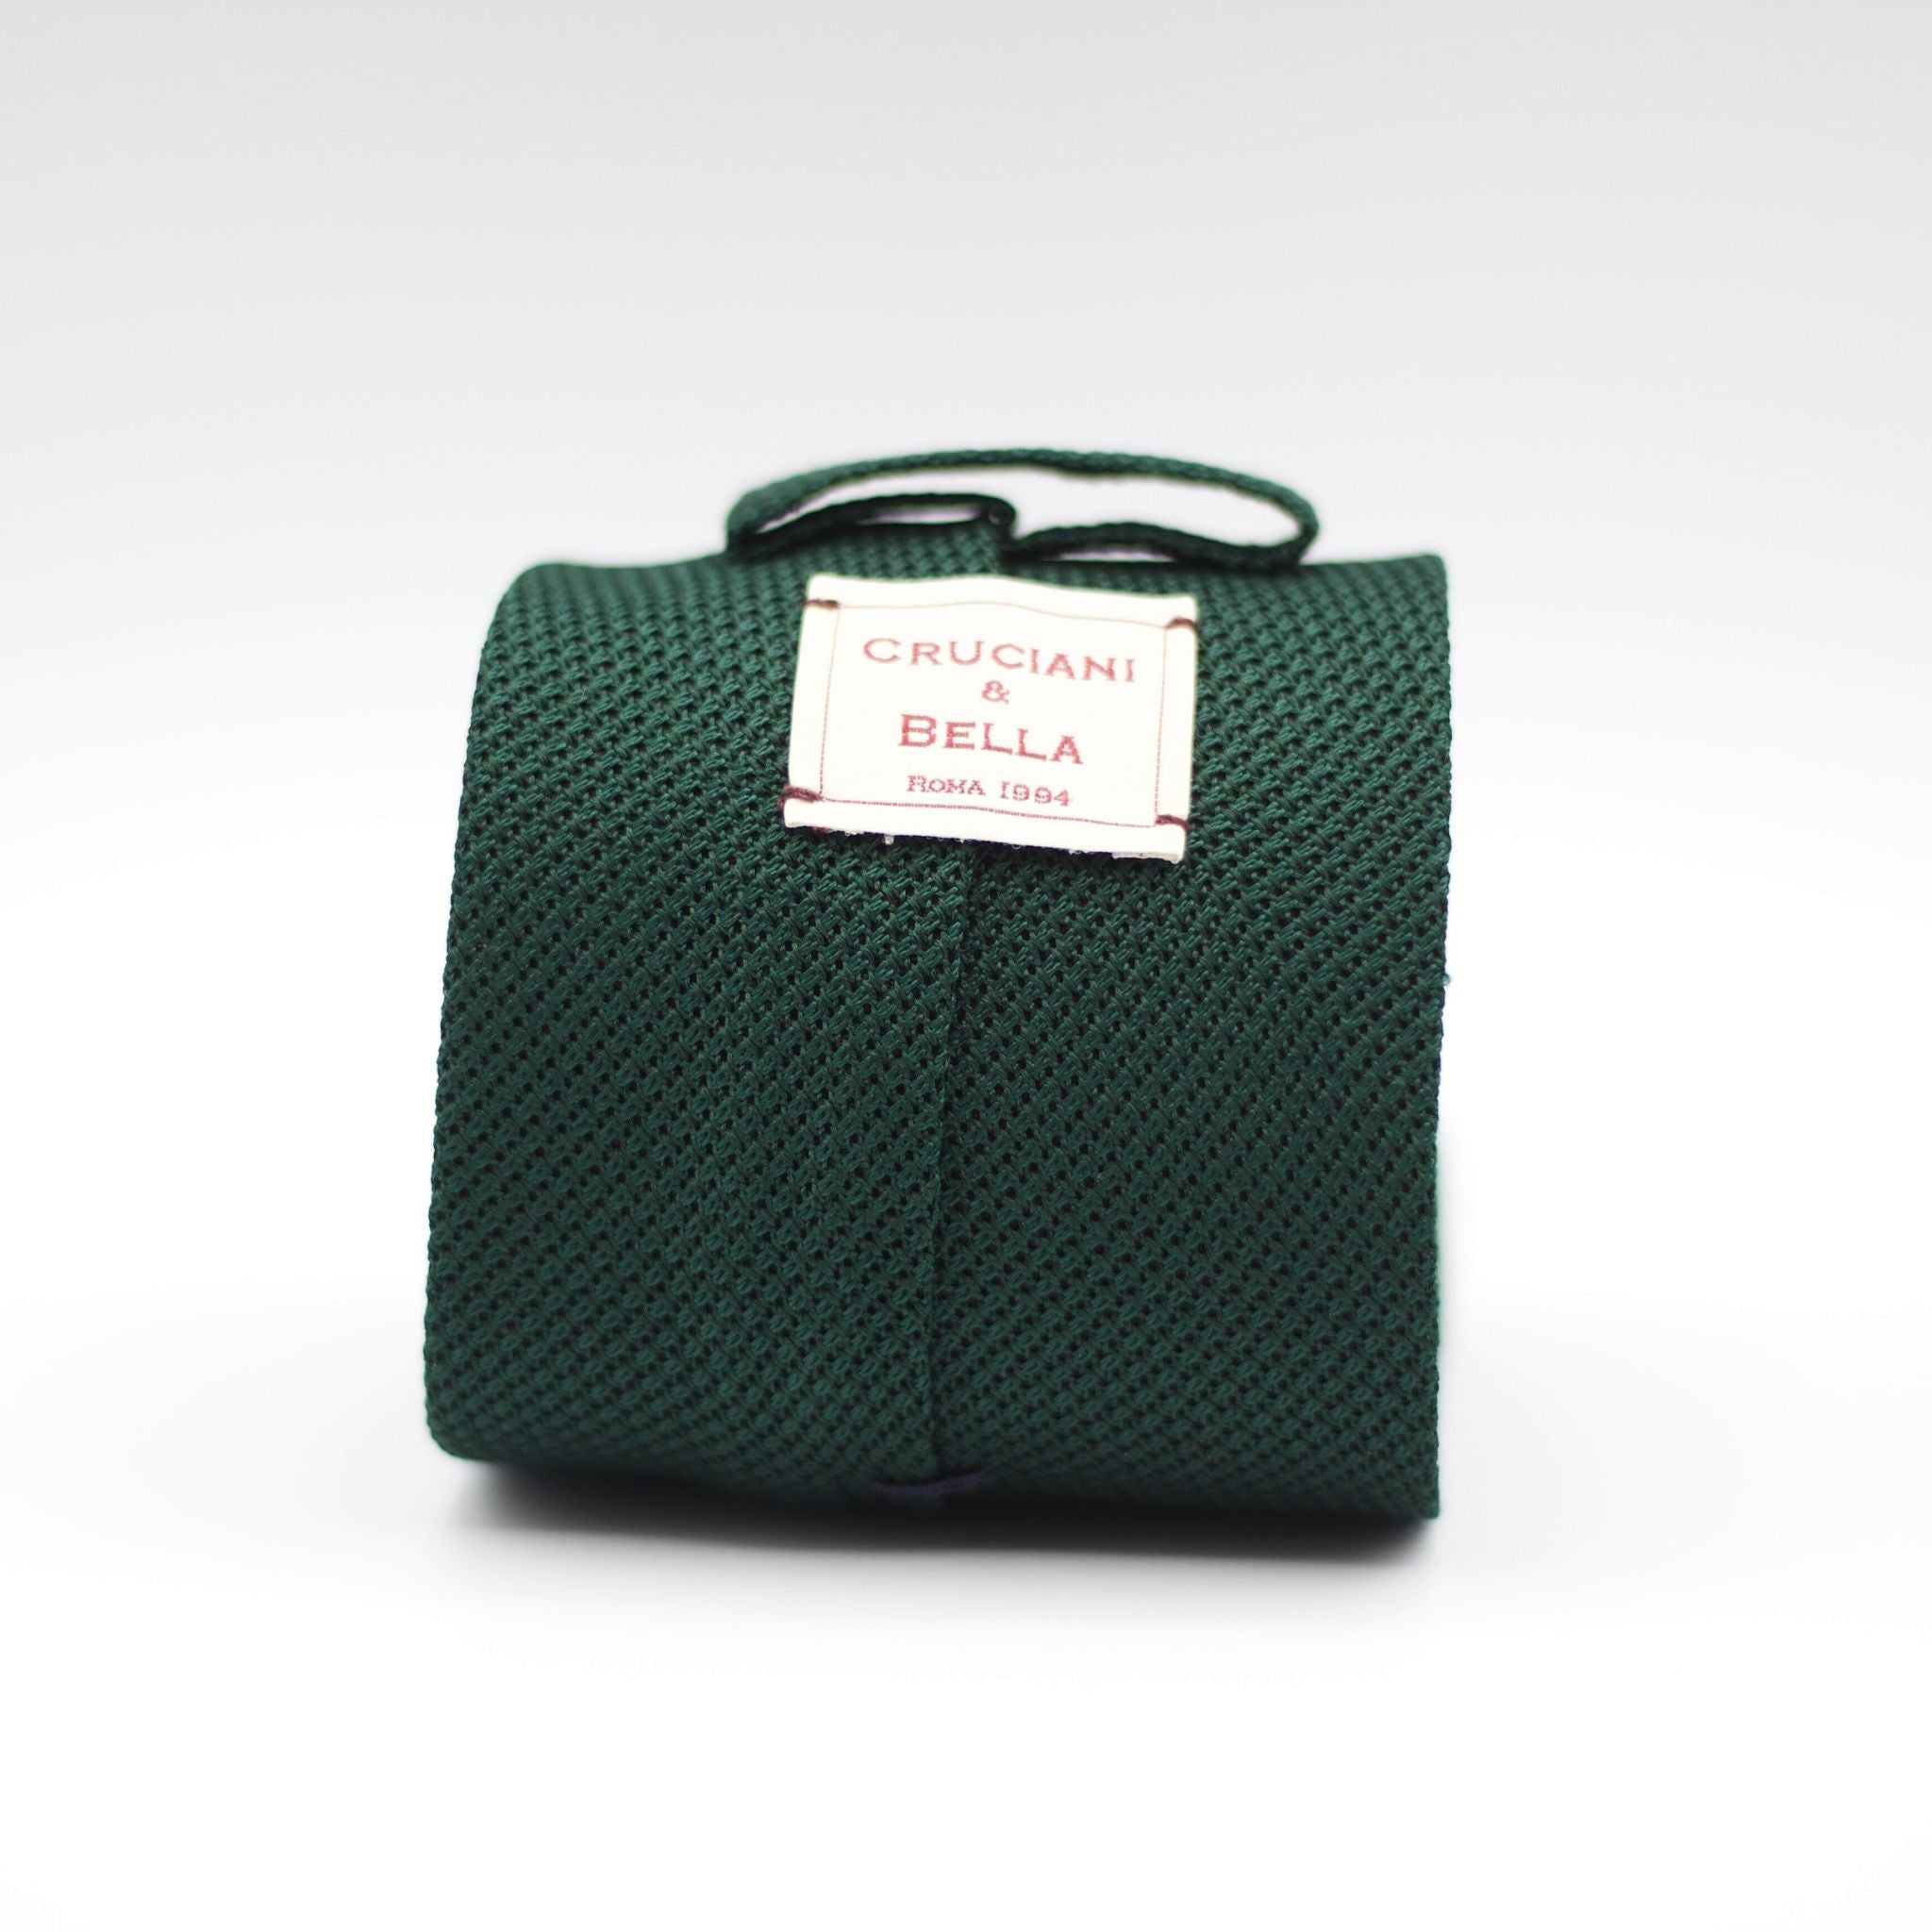 Cruciani & Bella 100% Silk Grenadine Garza Fina Woven in Italy Unlined Hand rolled blades Green tie Handmade in Italy 8 cm x 150 cm